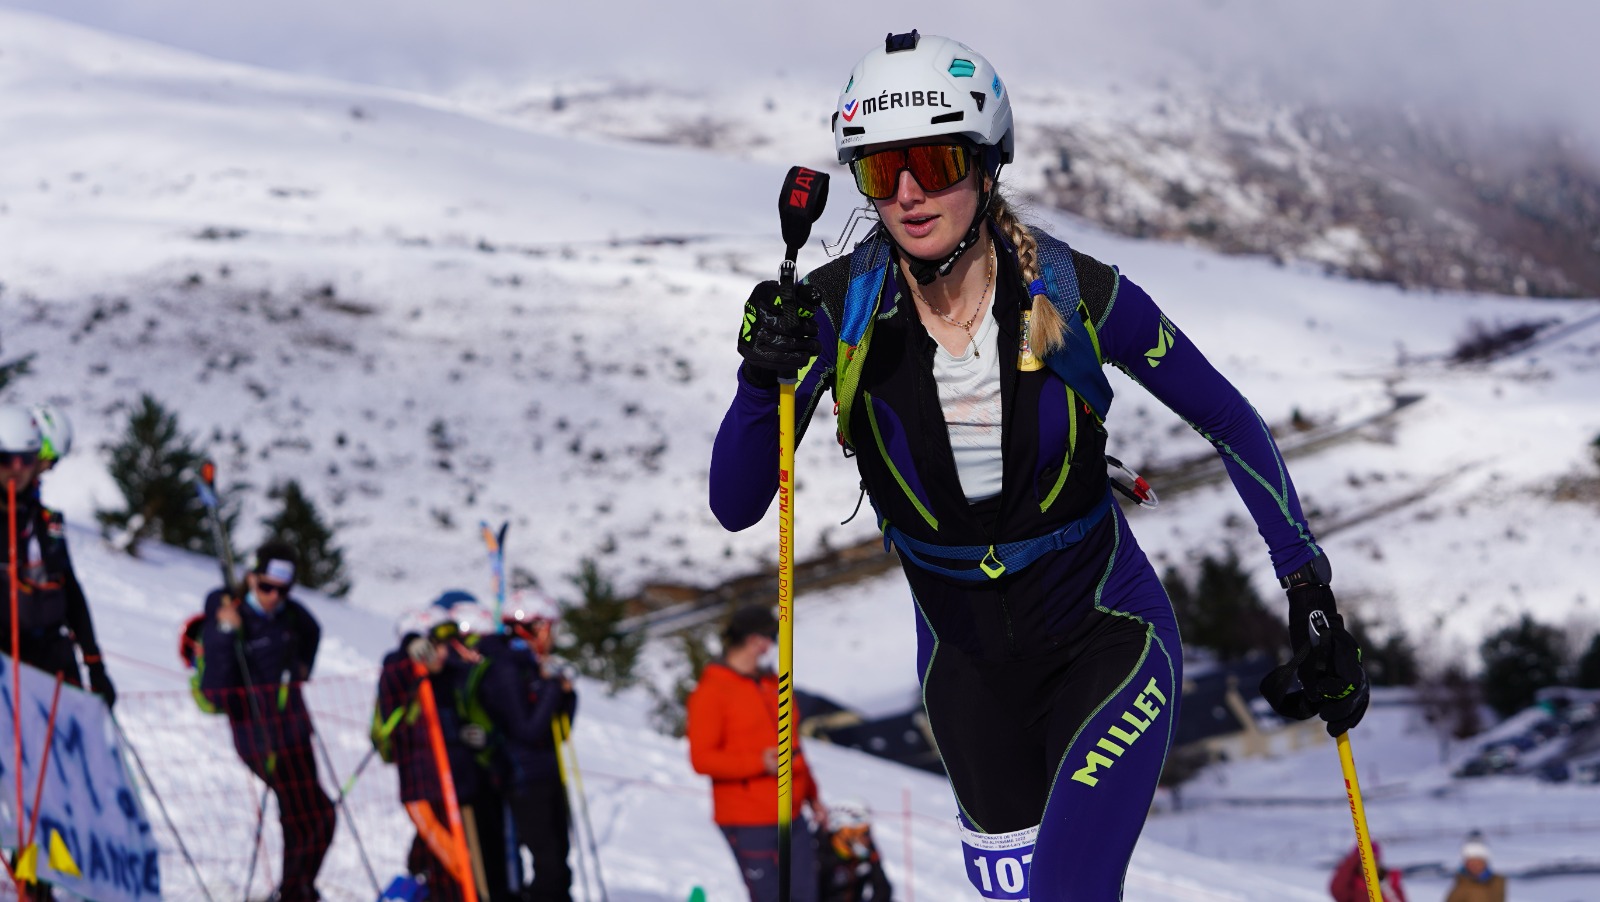 Harrop et Anselmet, champions de France en ski-alpinisme de sprint 2022